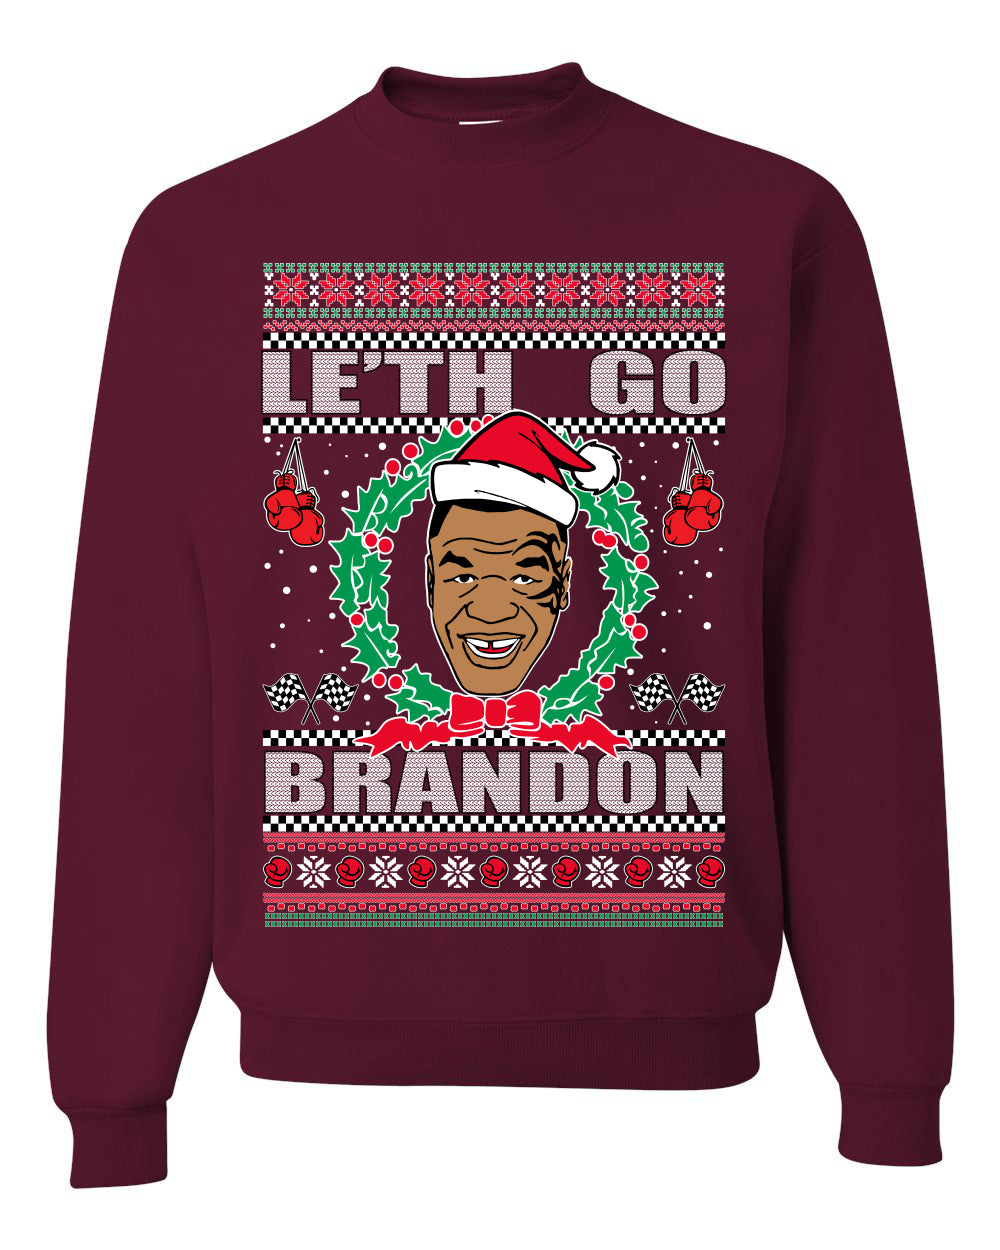 Le'th Go Brandon  Ugly Christmas Sweater Unisex Crewneck Graphic Sweatshirt